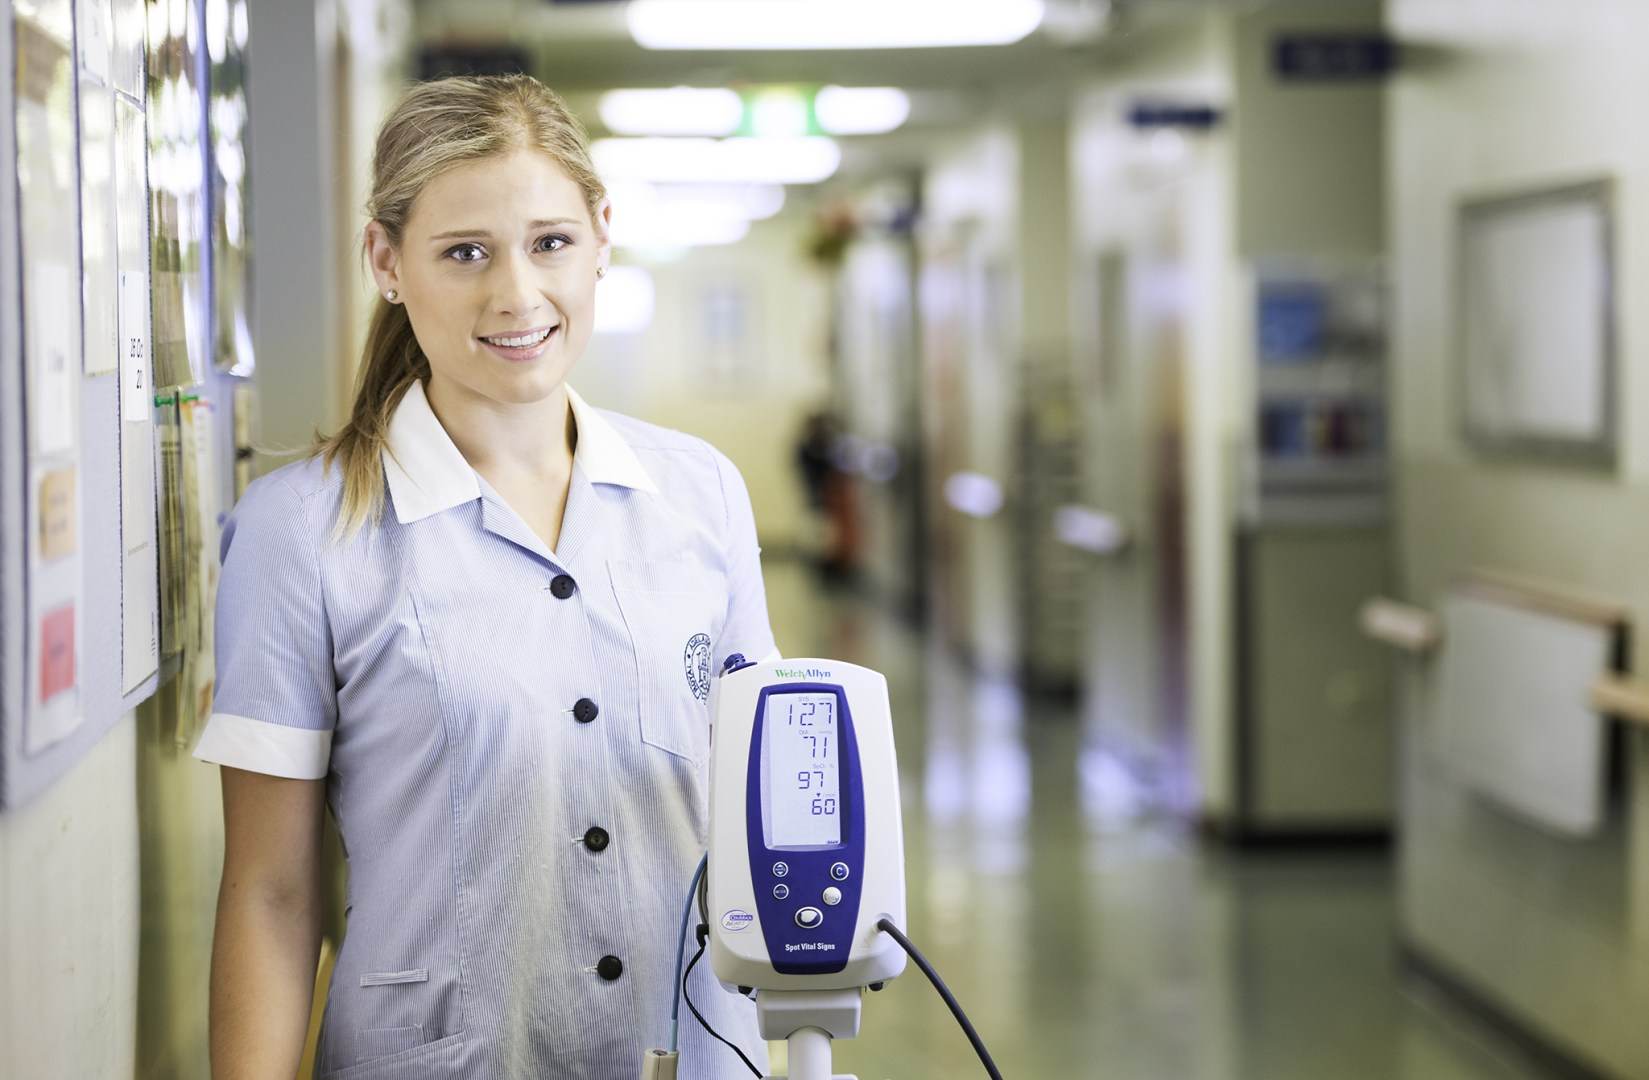 Study Nursing and Midwifery at the University of South Australia